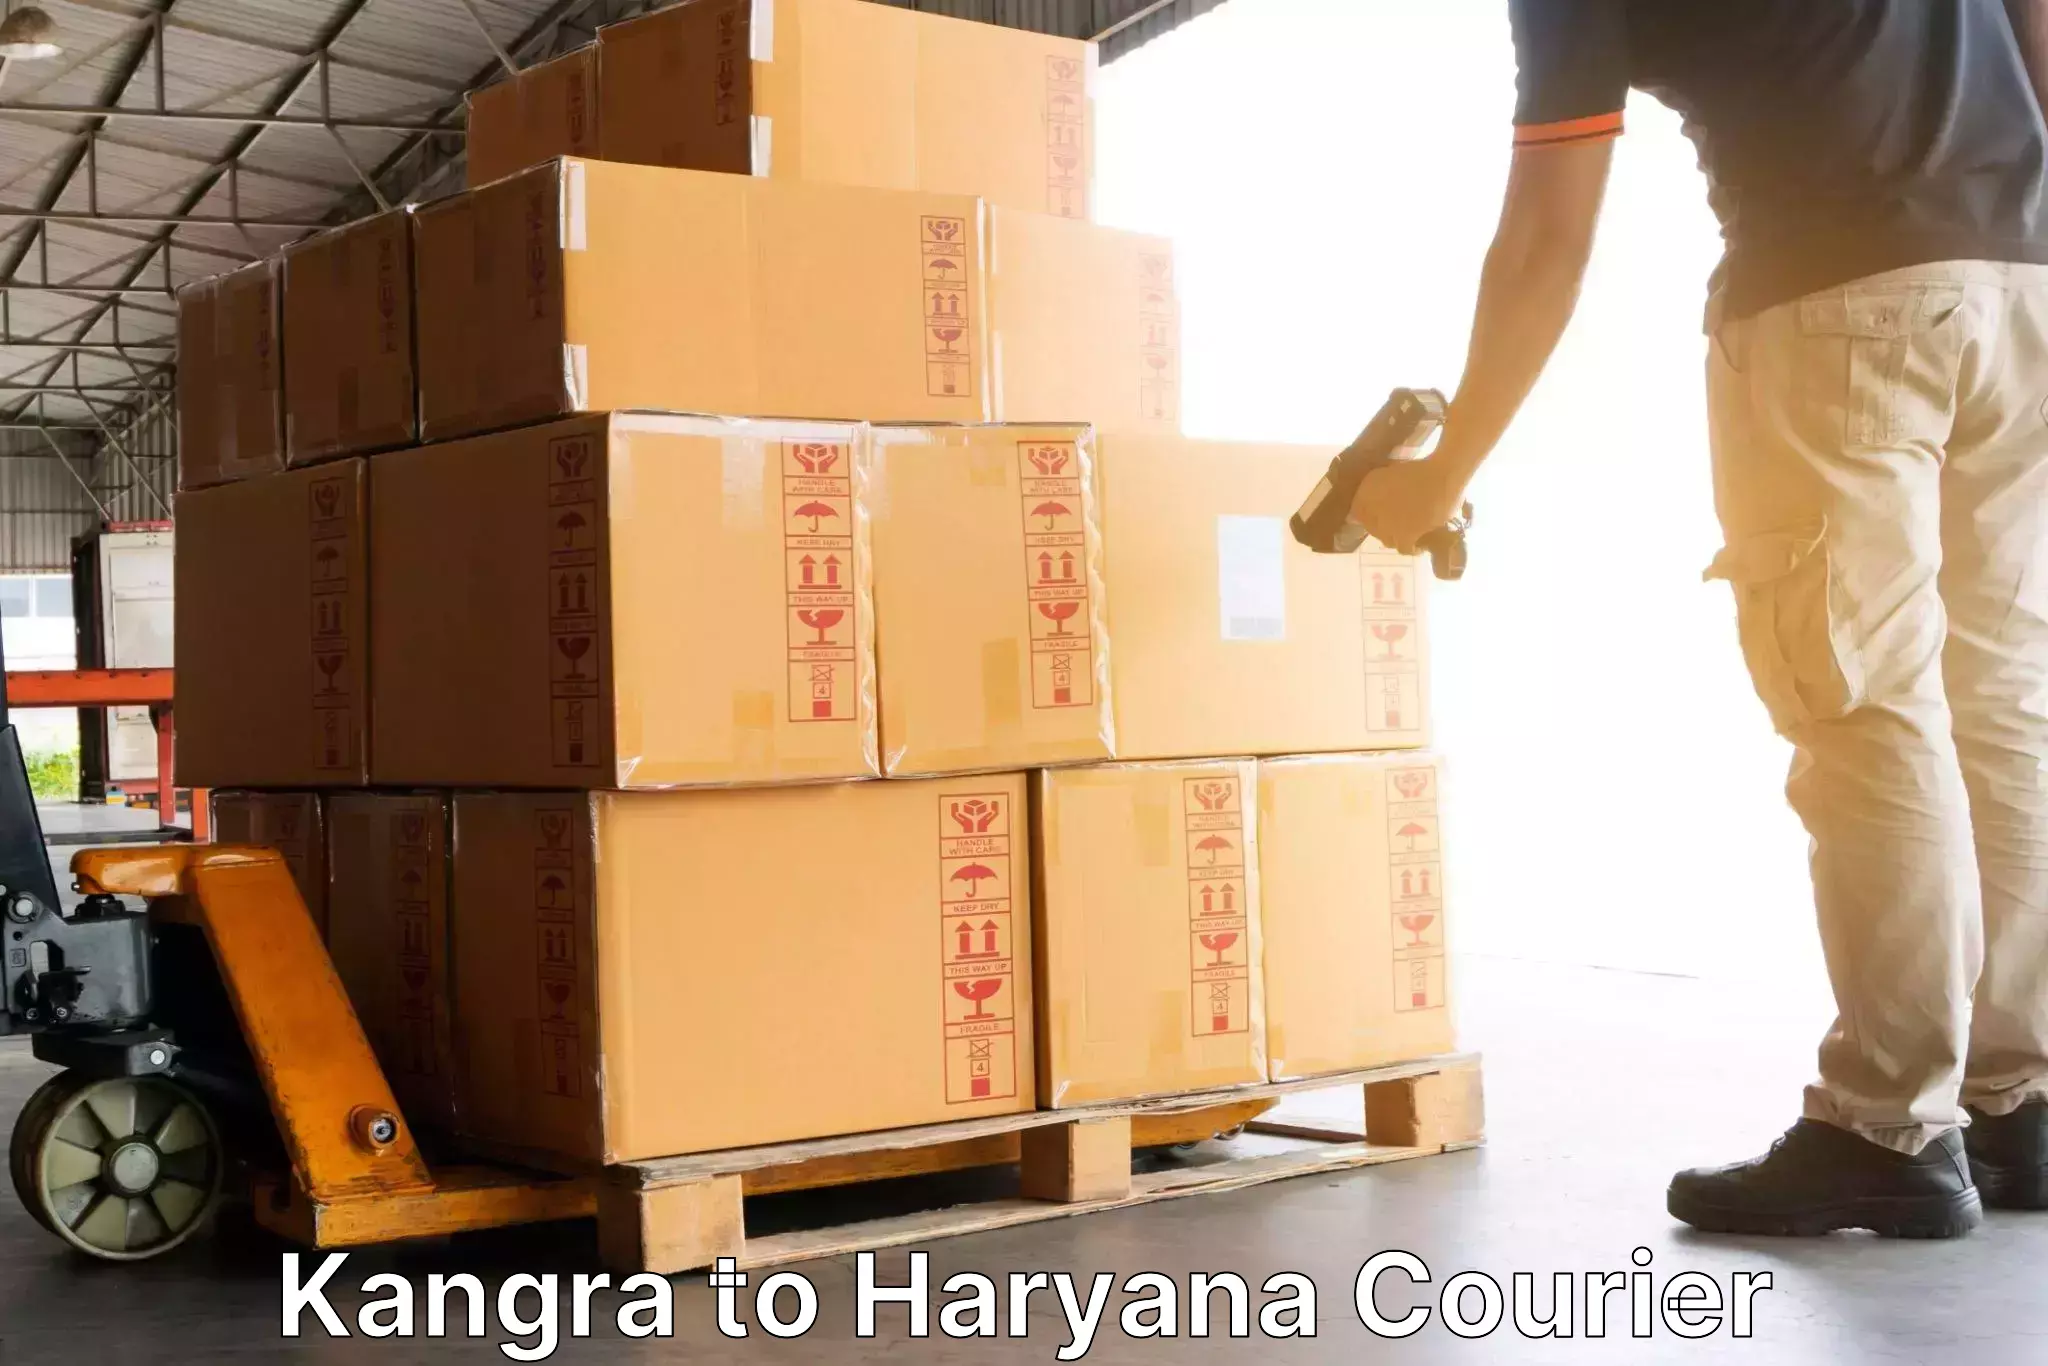 Courier insurance Kangra to Bilaspur Haryana